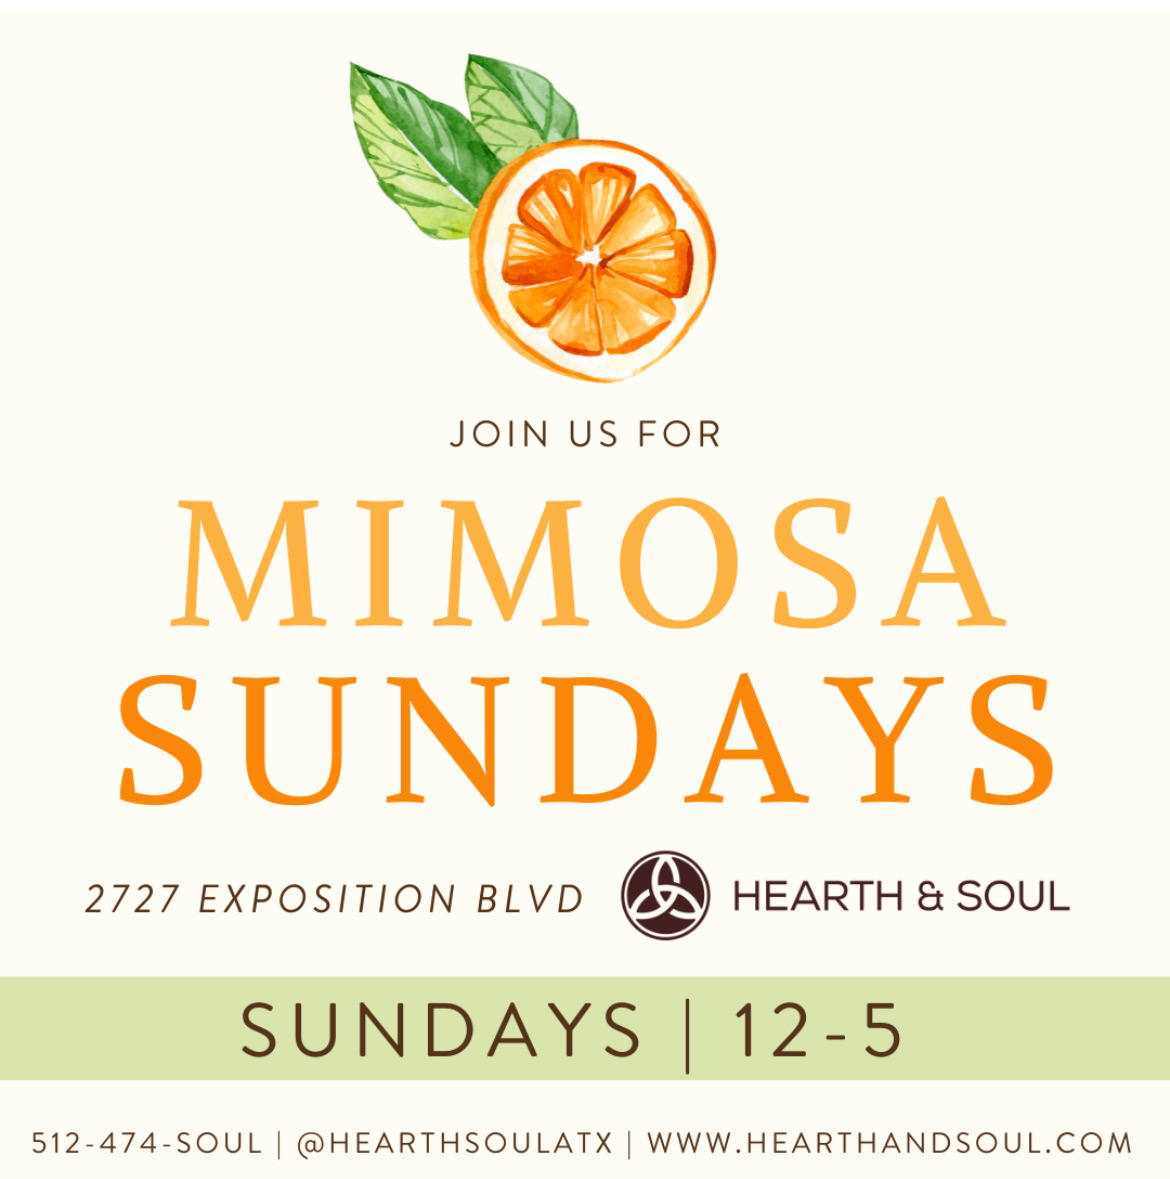 Hearth & Soul Sunday Mimosas!